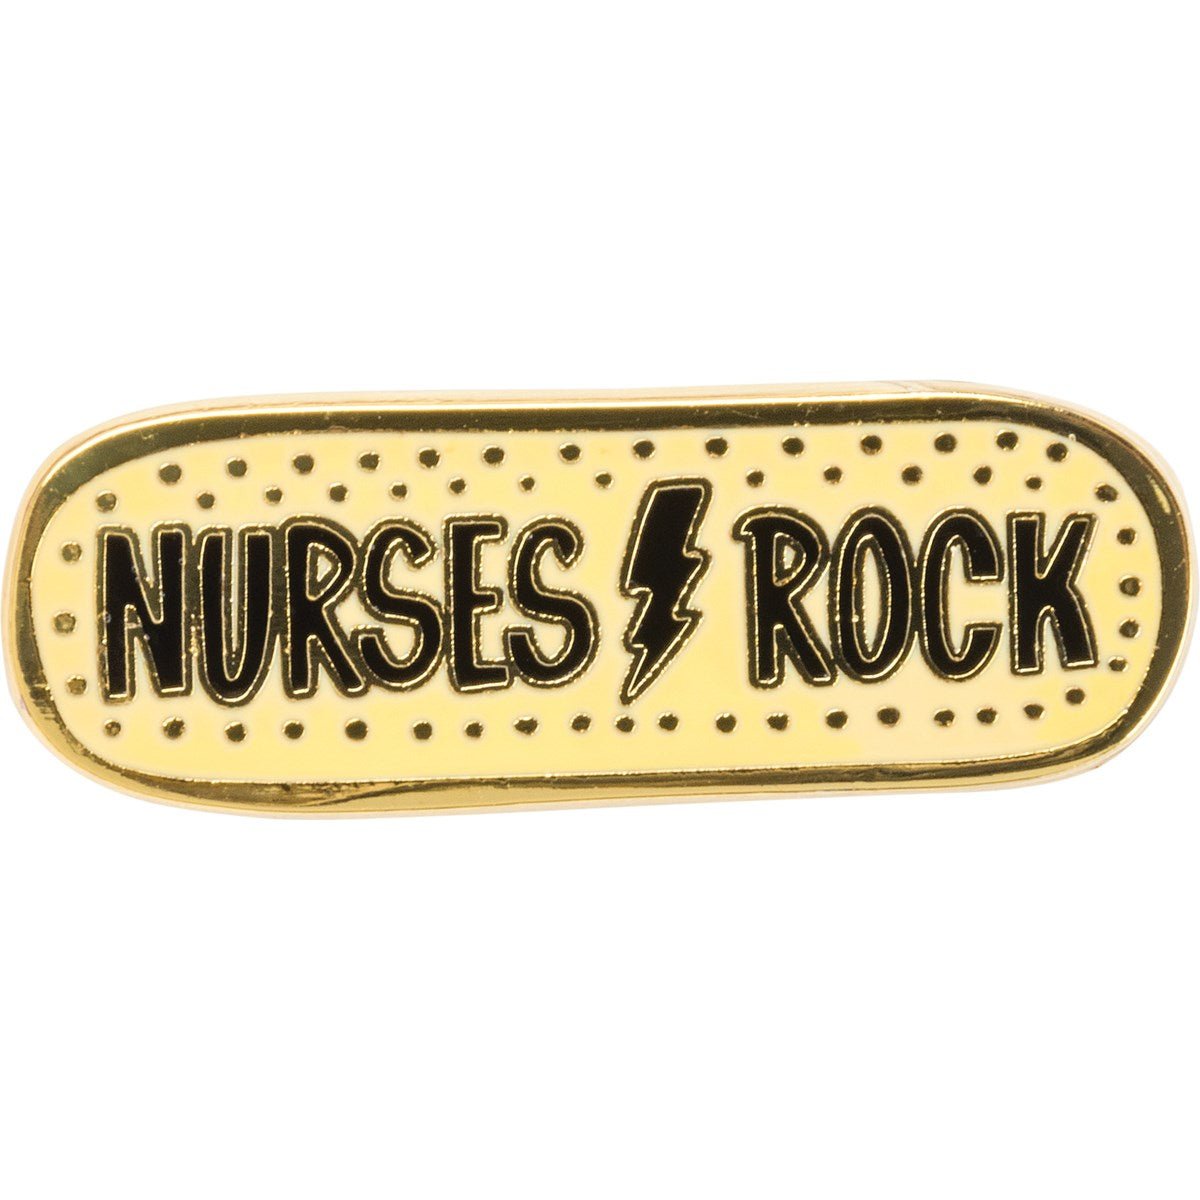 Nurses Rock Enamel Pin on Gift Card for Lapel, Backpack, Purse, Lanyard, Jacket